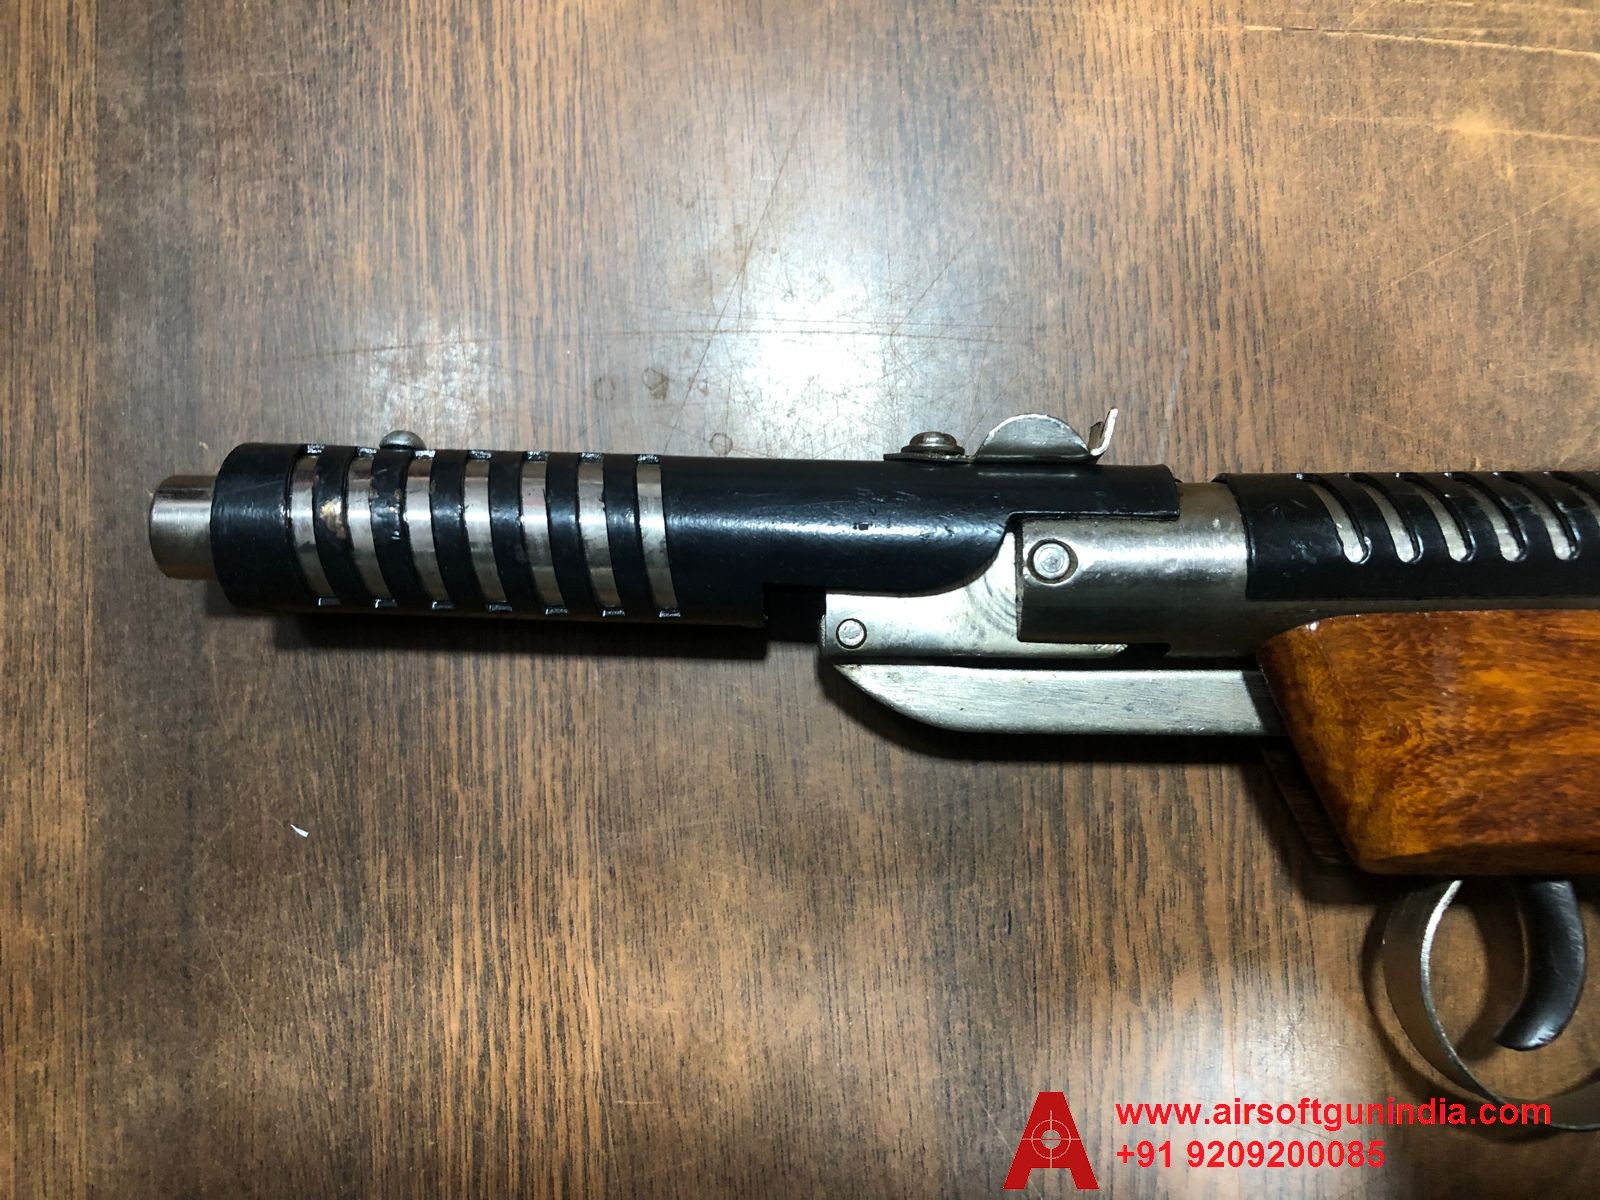 Eagle Master Mark 3 Wooden .177cal, 4.5mm Break Barrel Air Pistol By Airsoft Gun India